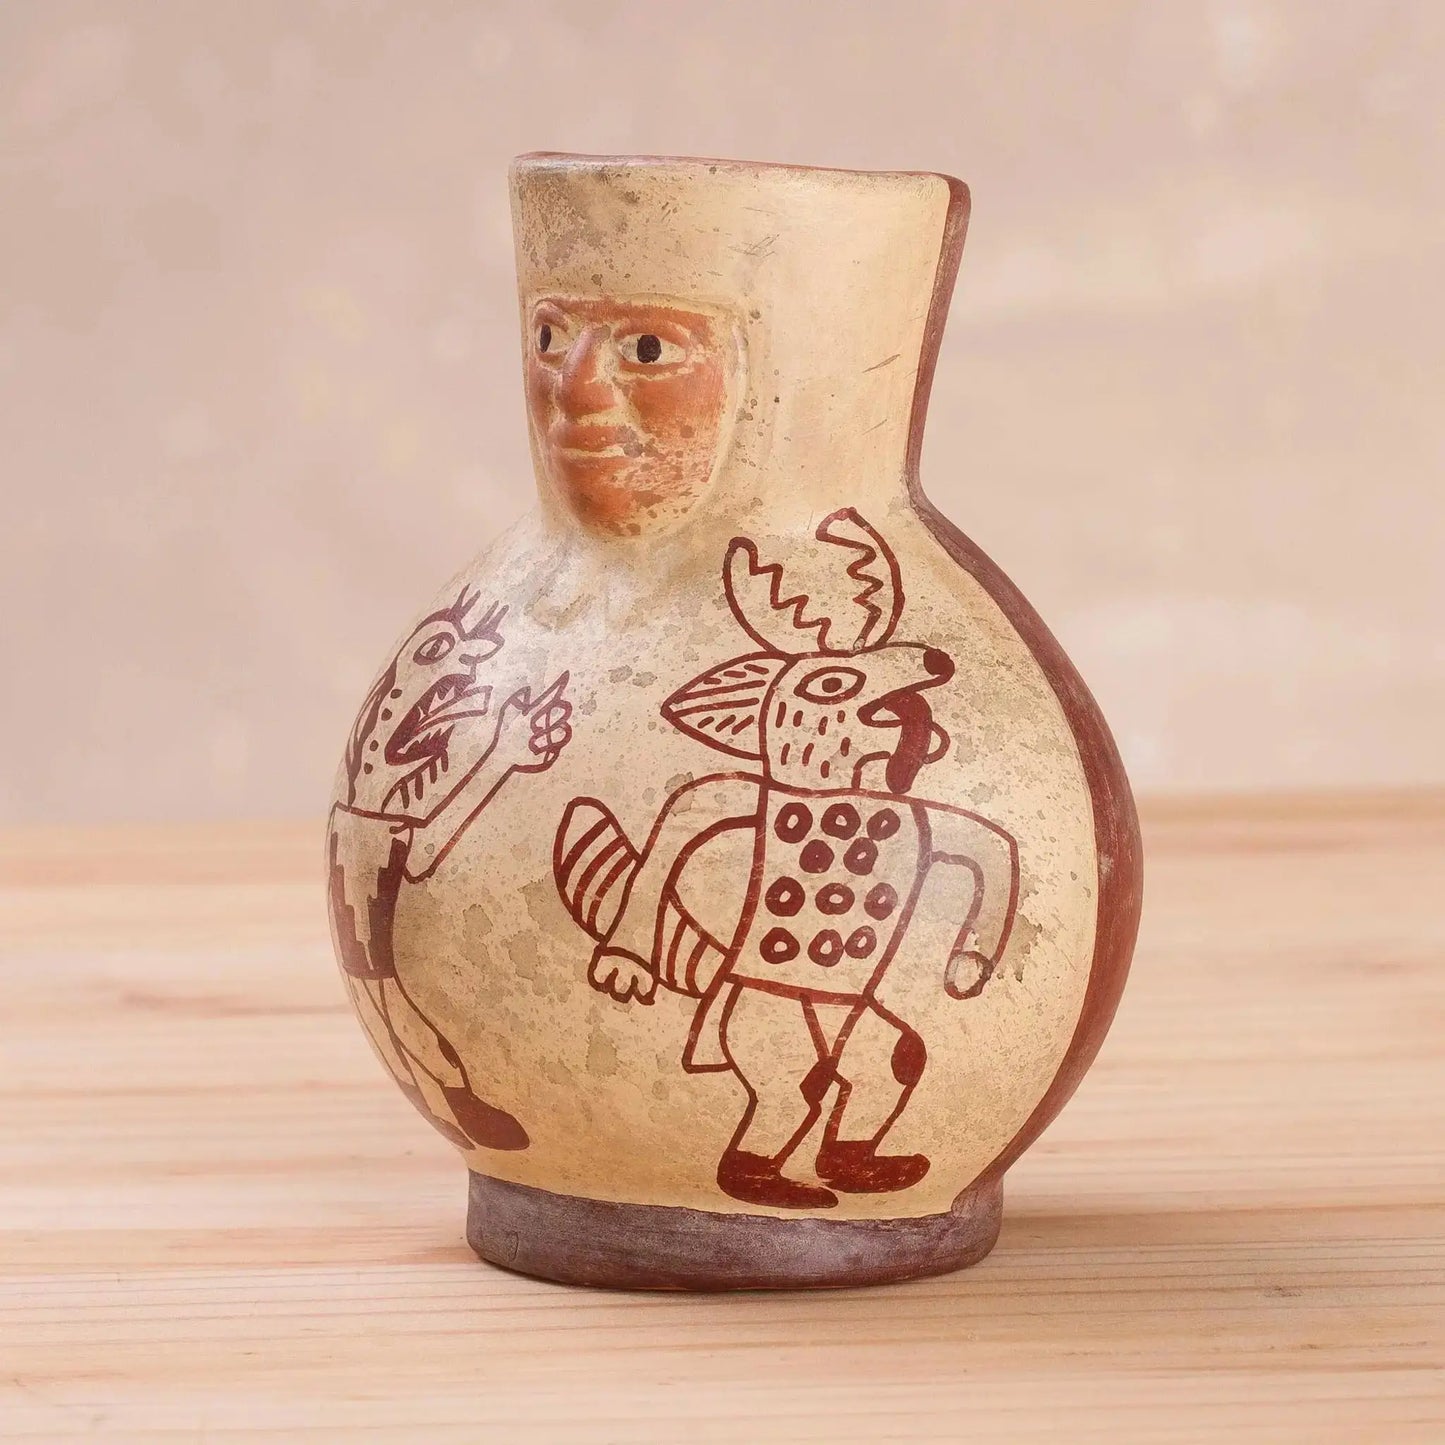 Moche Pot - Handcrafted Ceramic Decorative Vase from Peru -